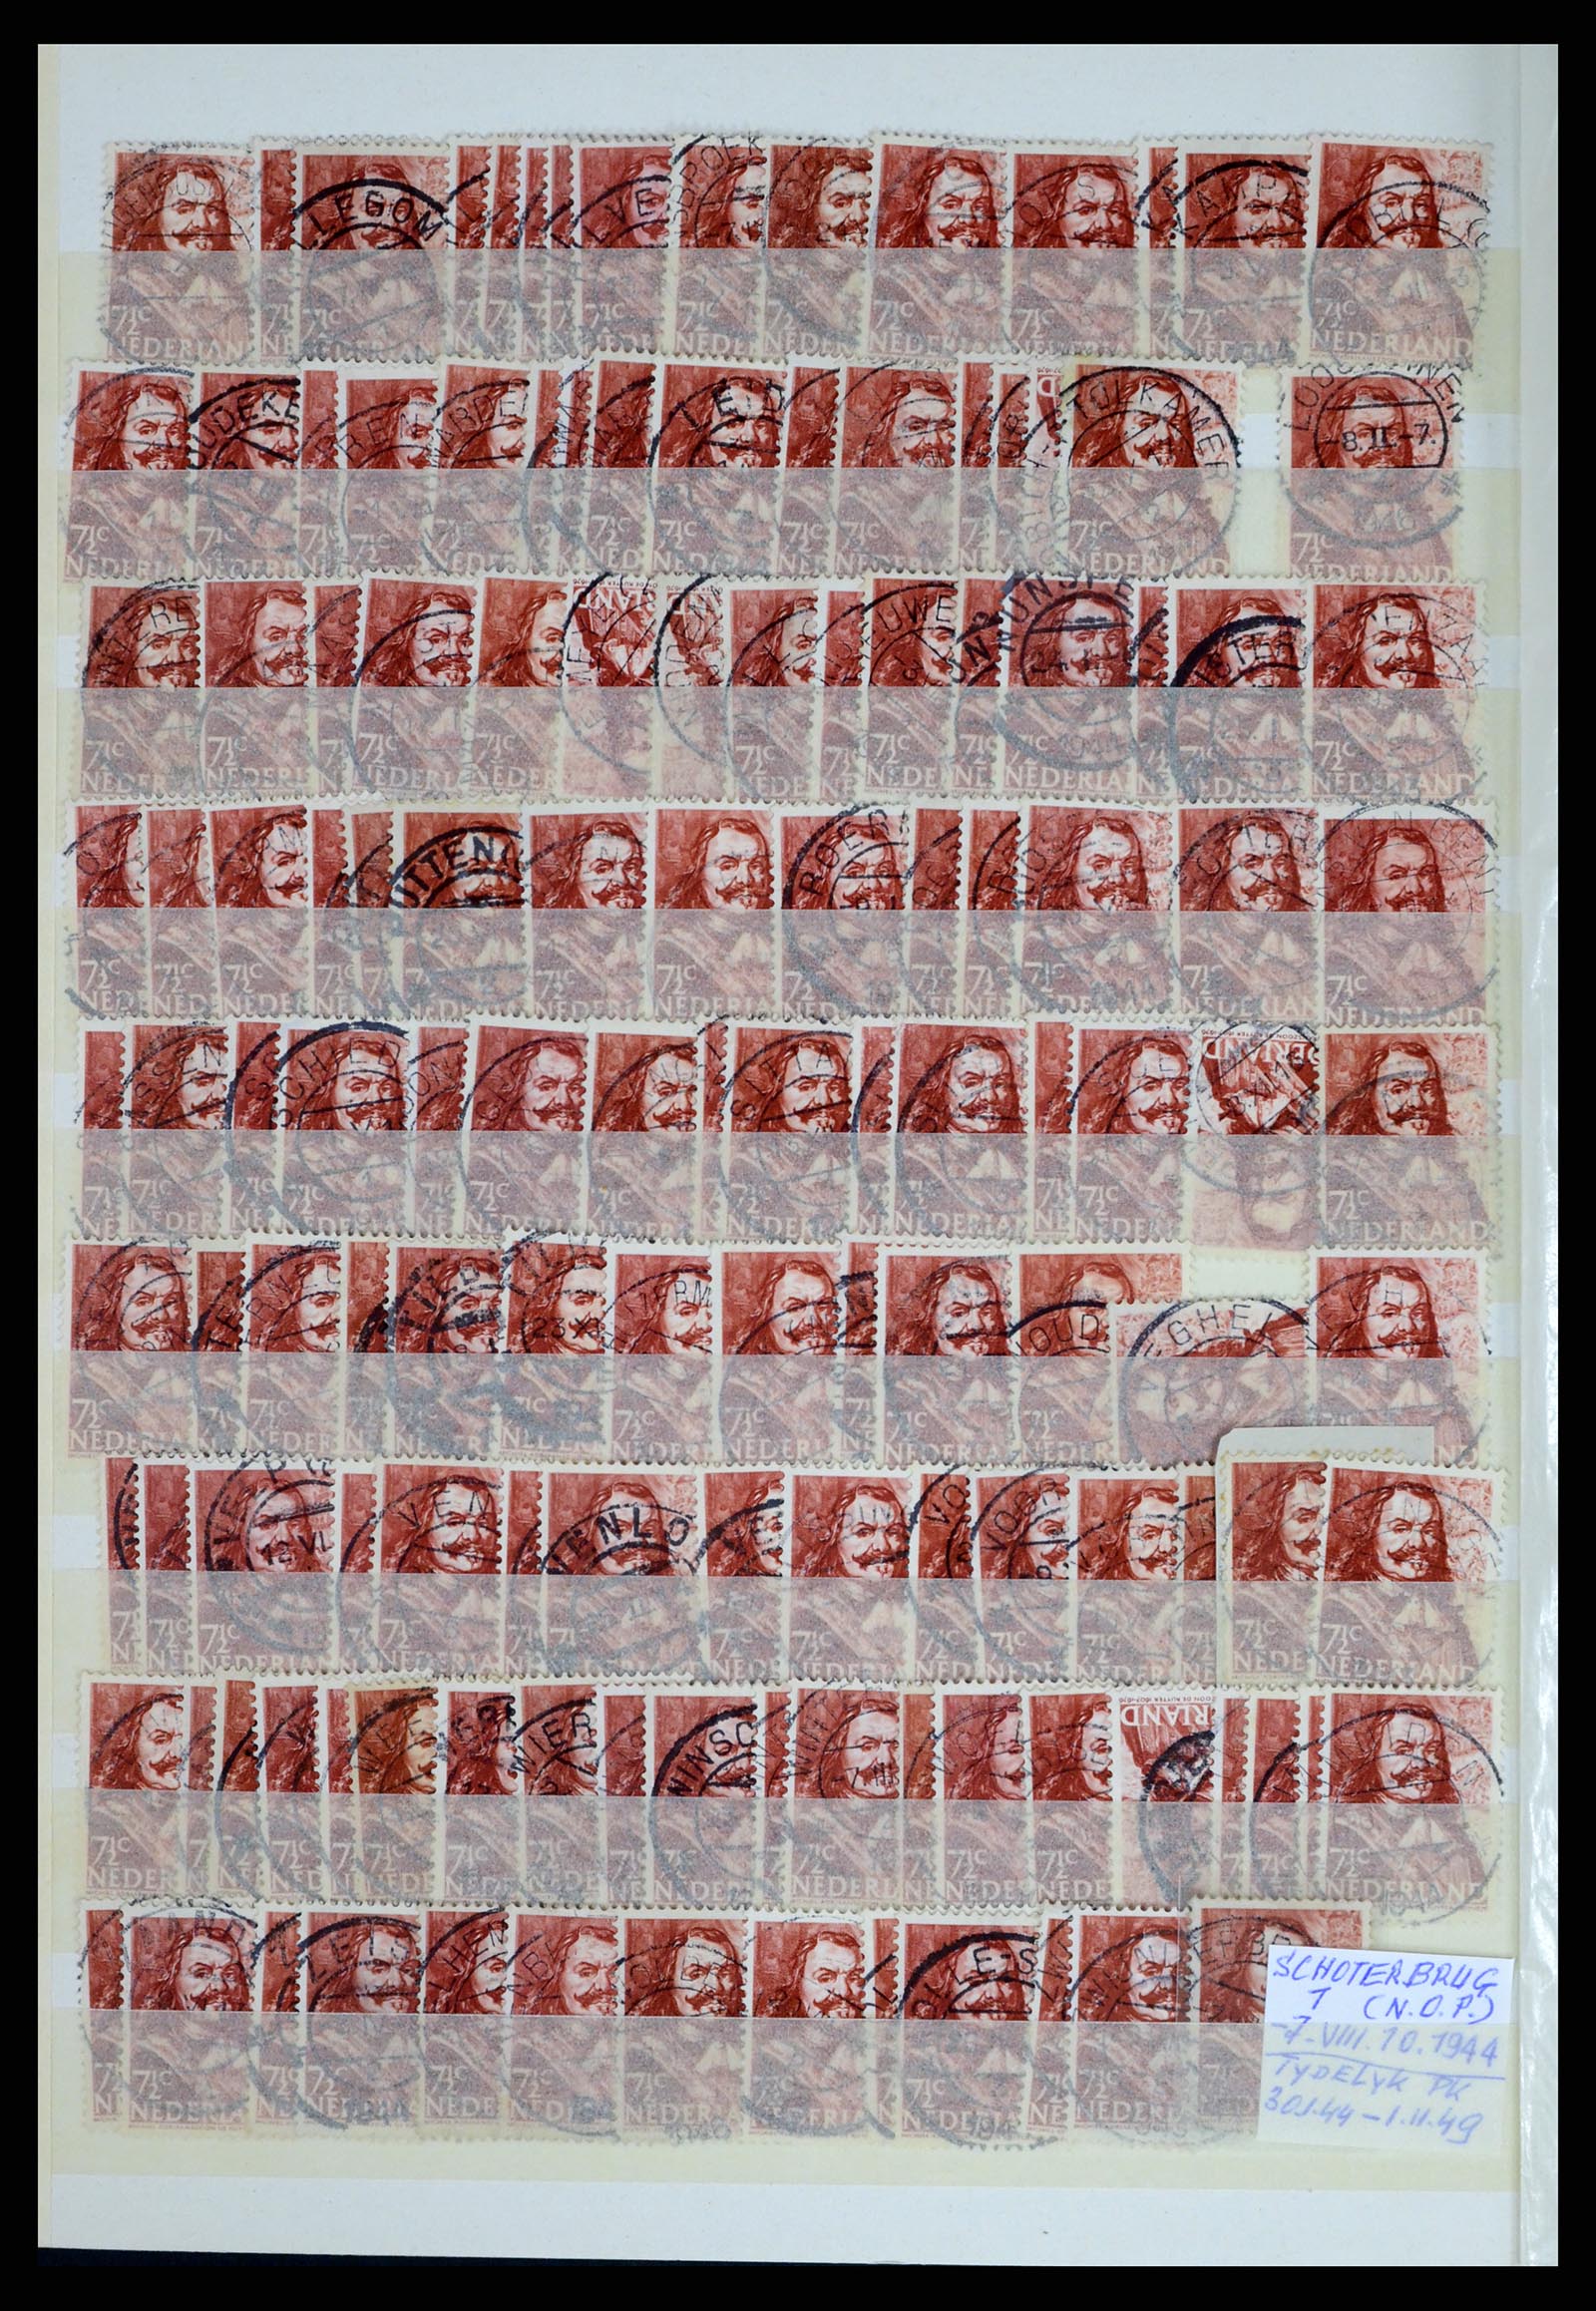 37424 036 - Stamp collection 37424 Netherlands shortbar cancels.